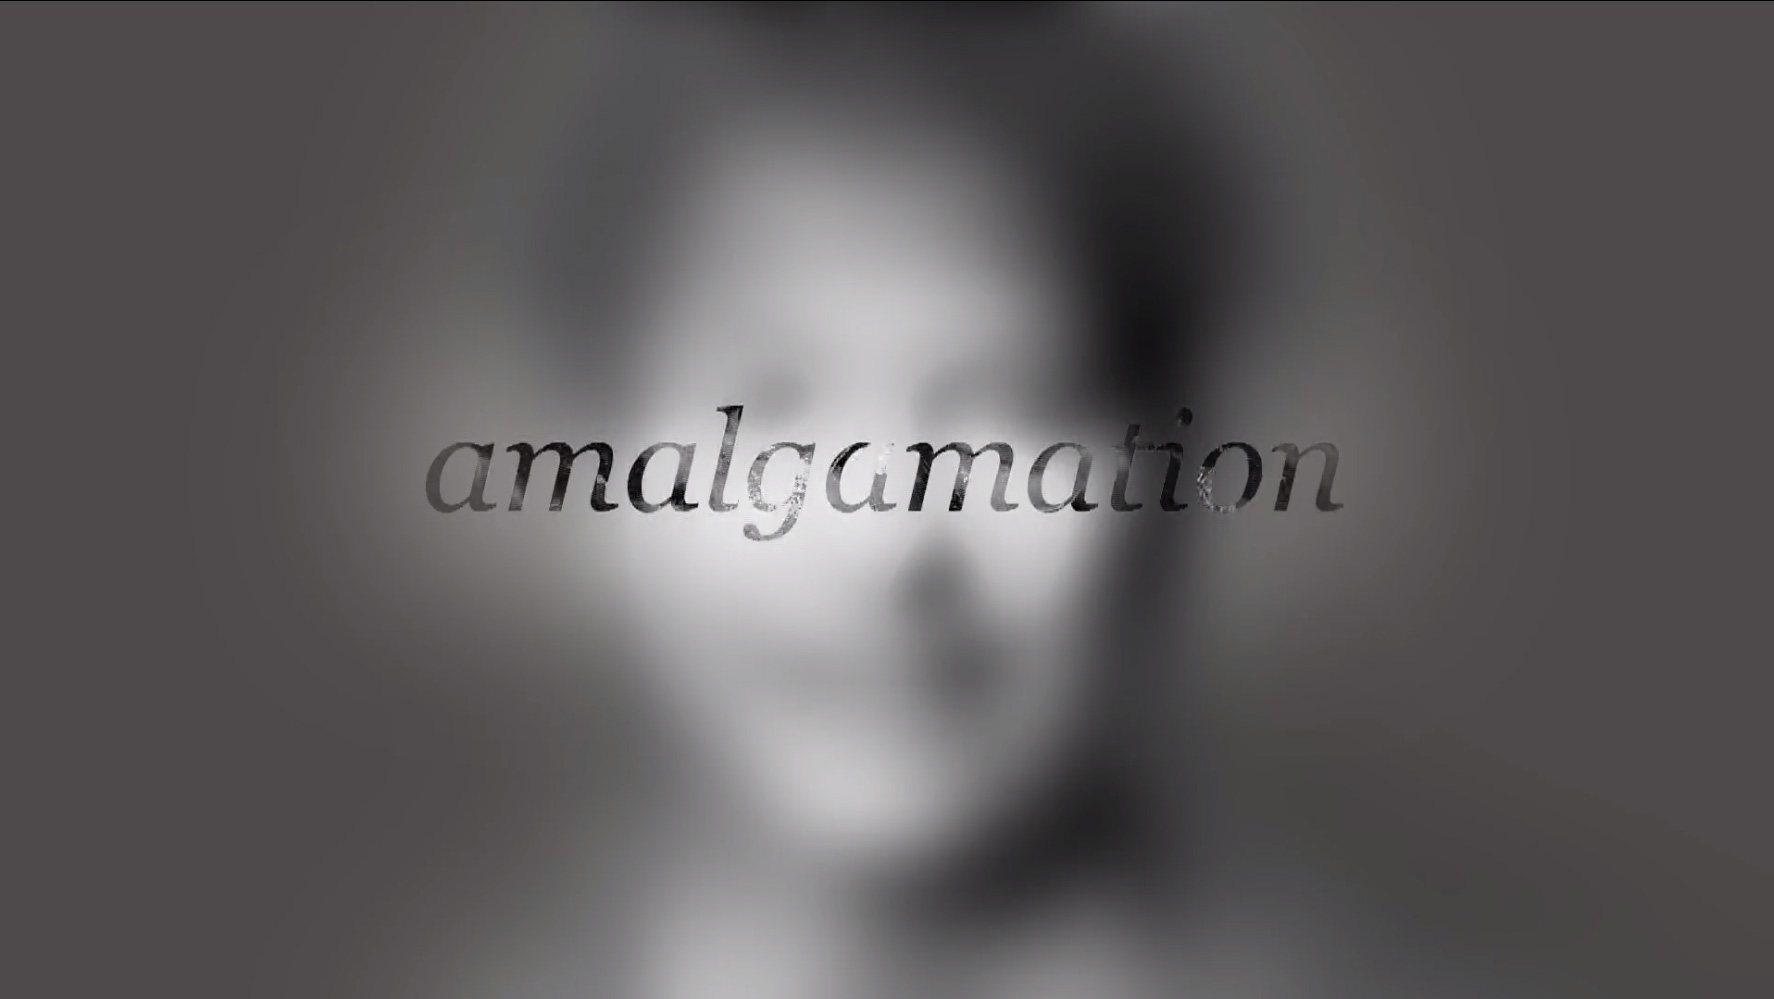 Amalgamation / Micaël Reynaud & Michael Jang (3)